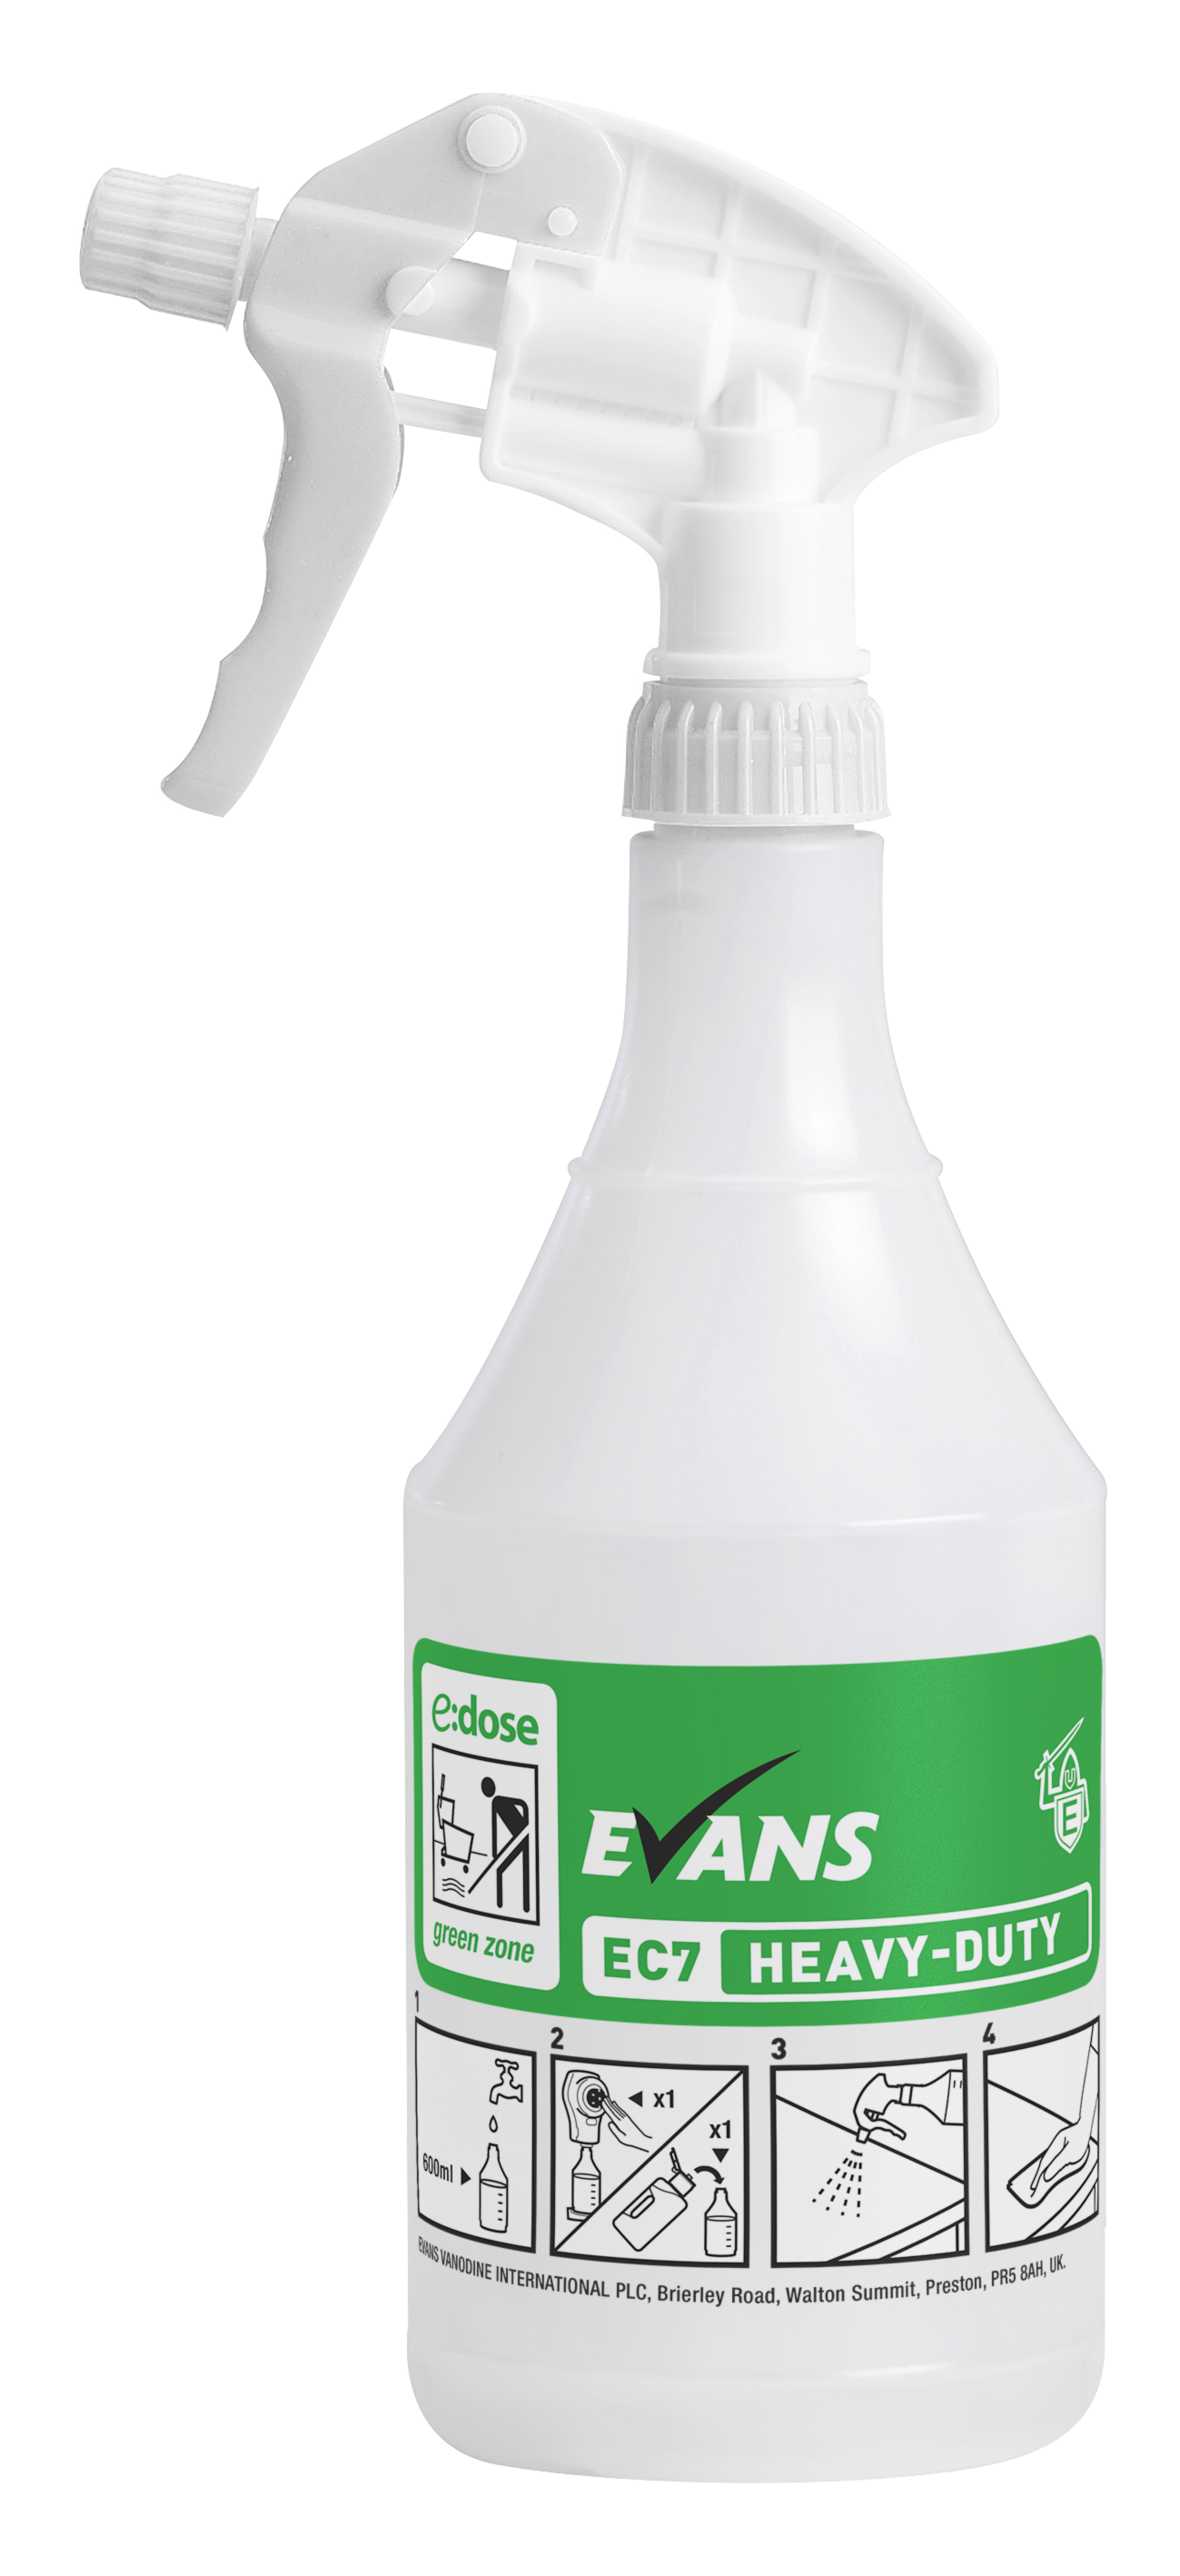 Evans Vanodine EC7 Green Zone Trigger Sprayer